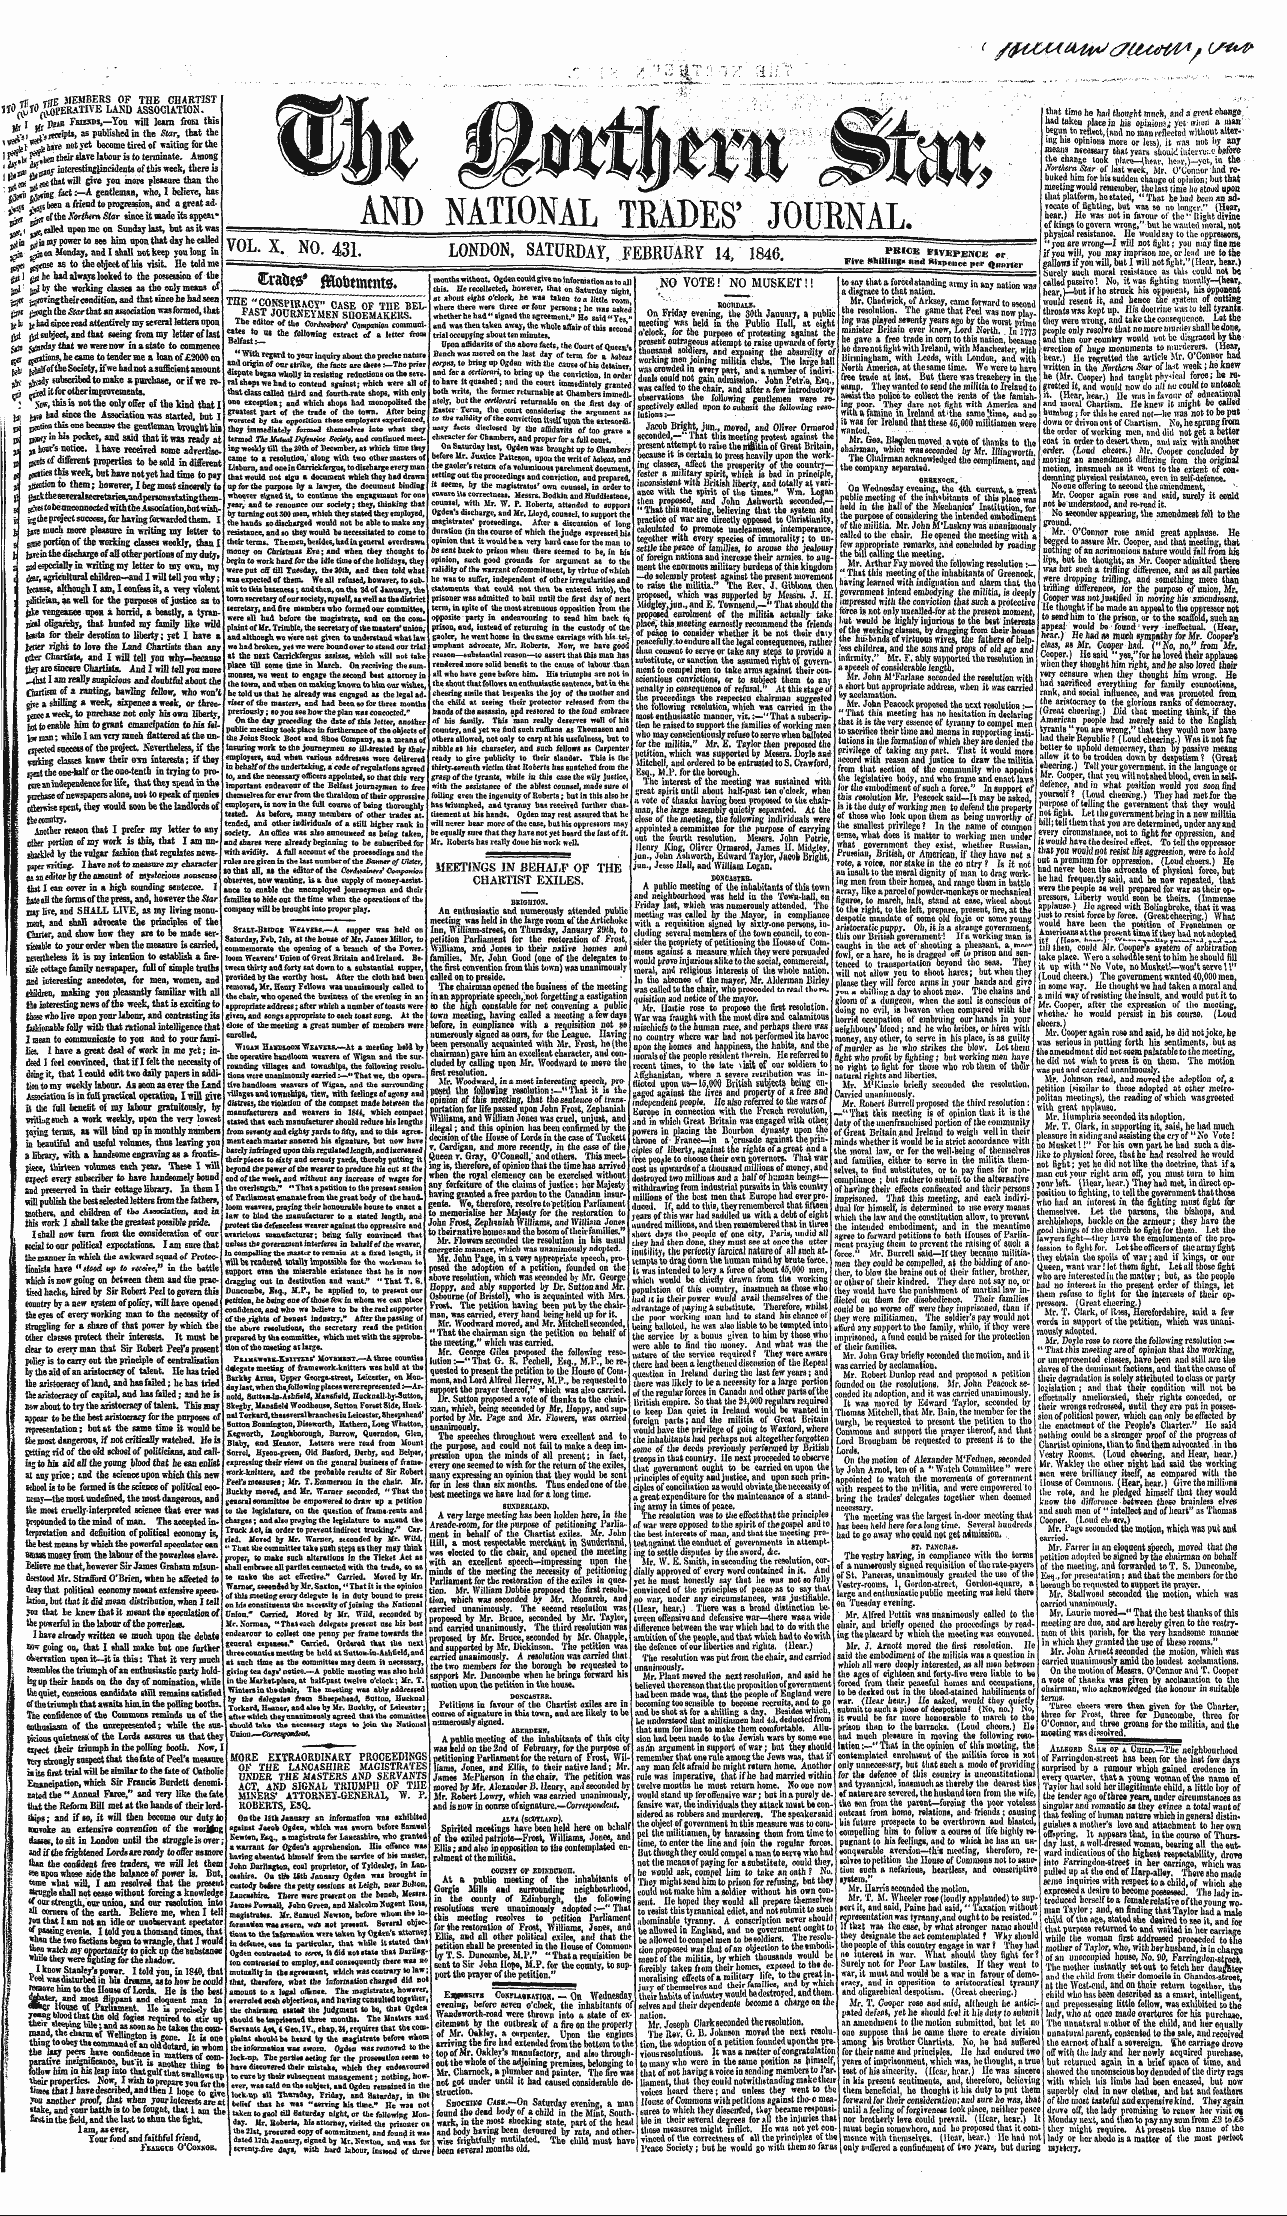 Northern Star (1837-1852): jS F Y, 2nd edition - Crafcca* Ffiobements*